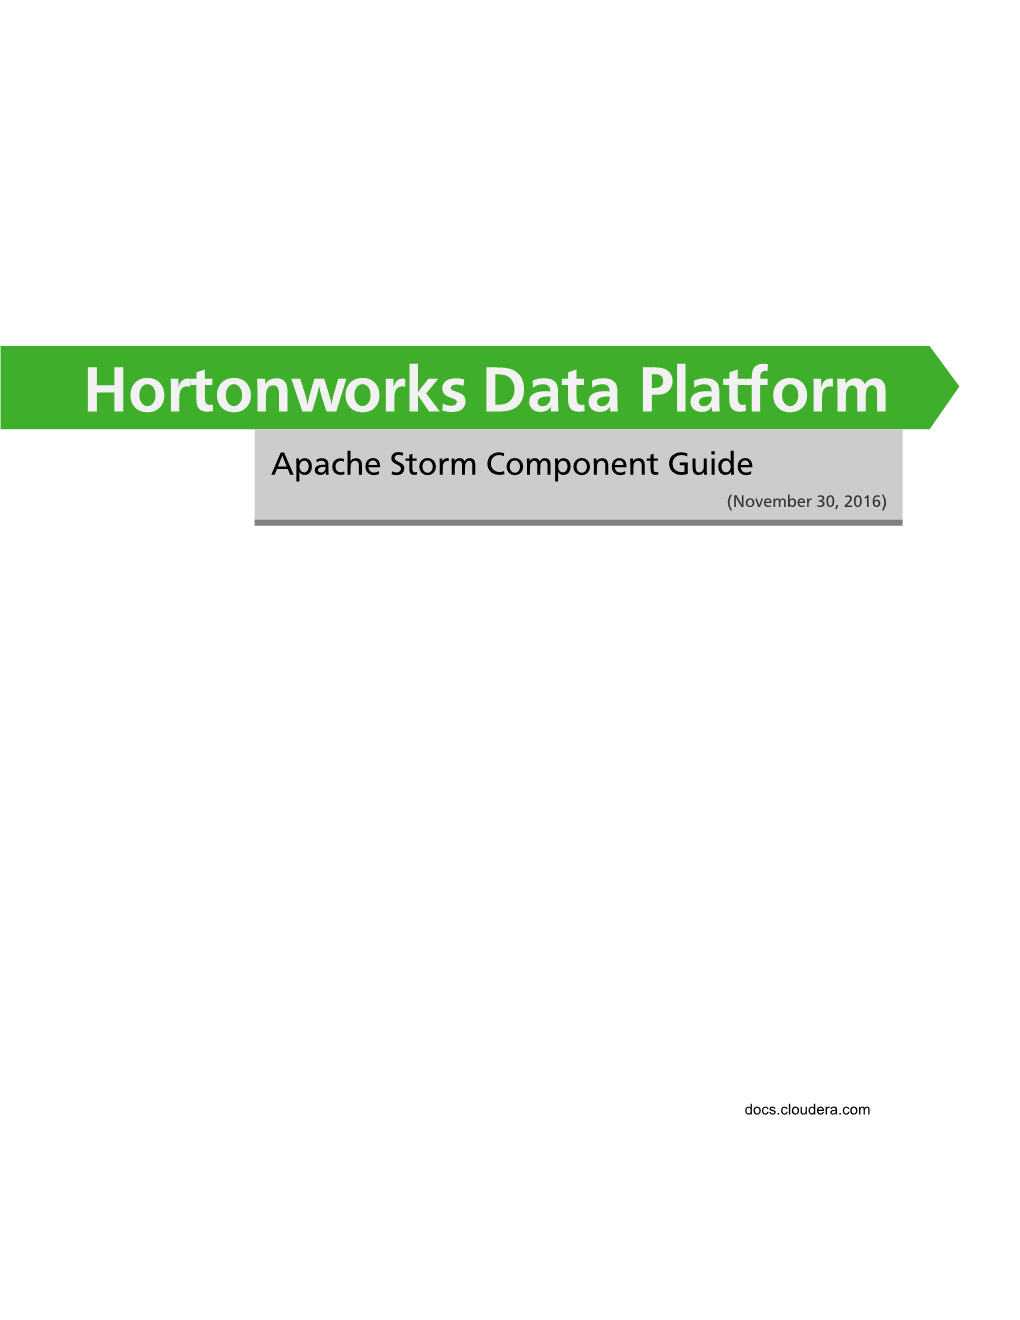 Hortonworks Data Platform Apache Storm Component Guide (November 30, 2016)